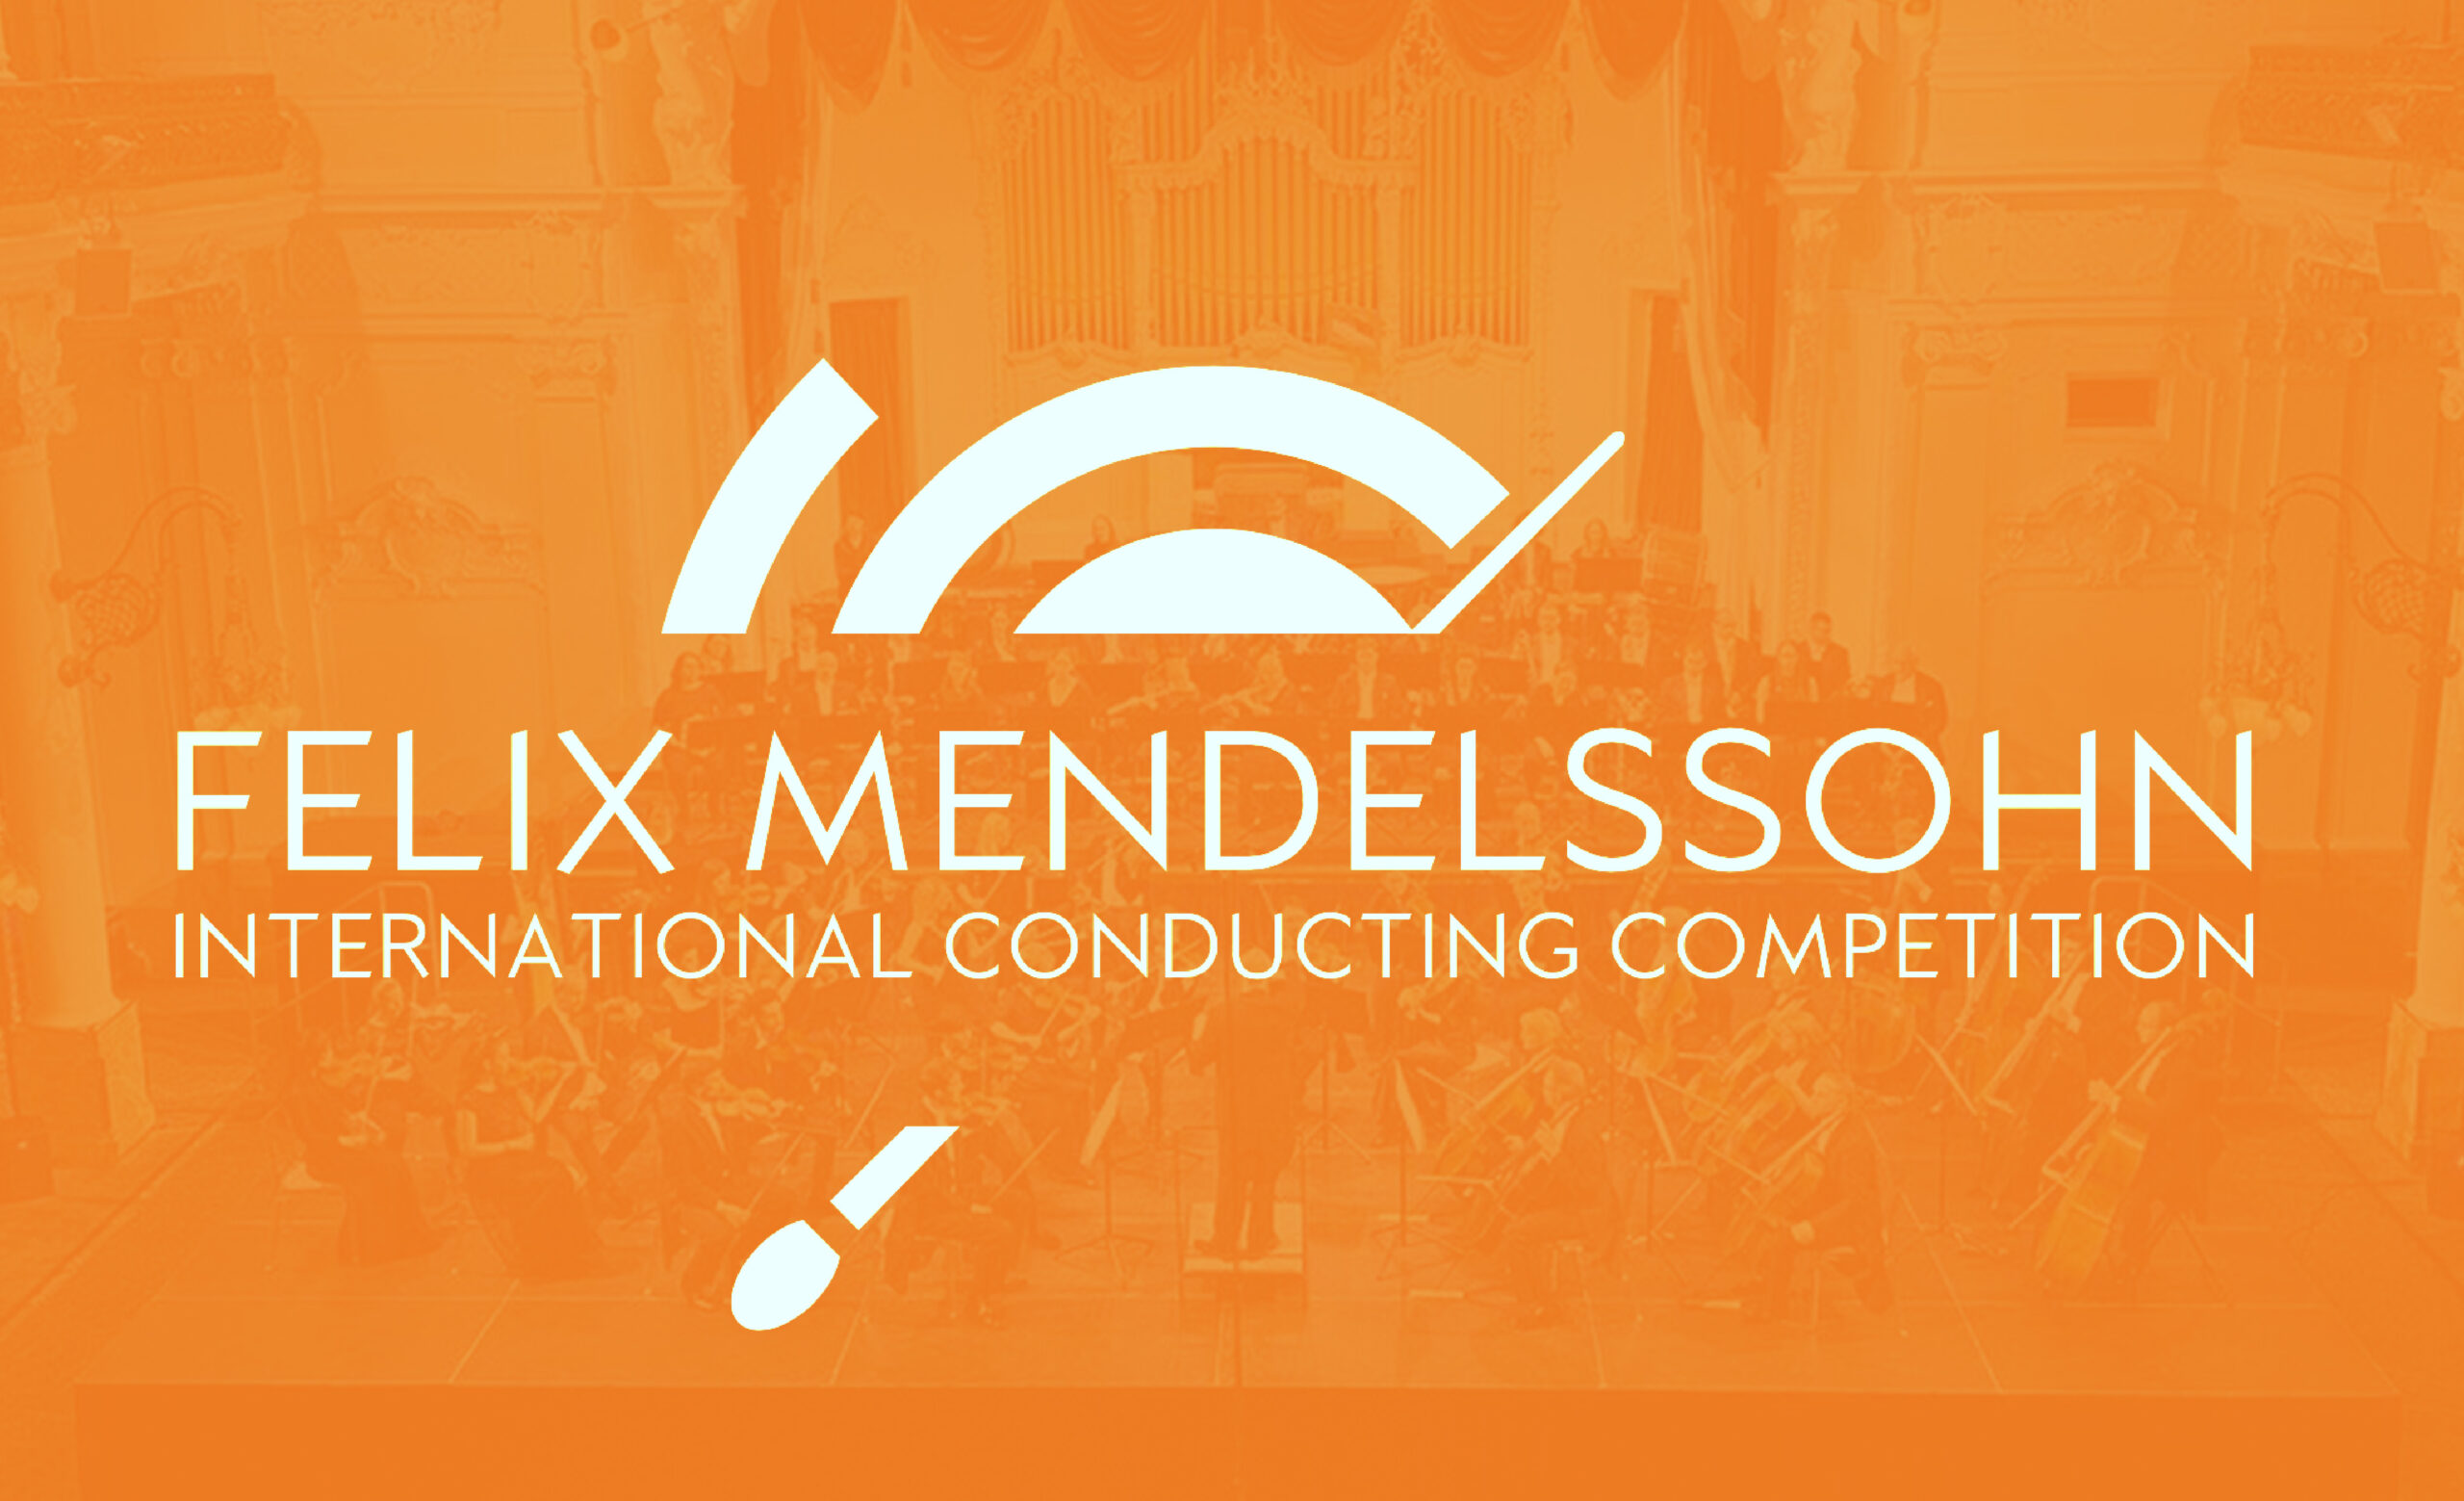 Mendelssohn Conducting competition